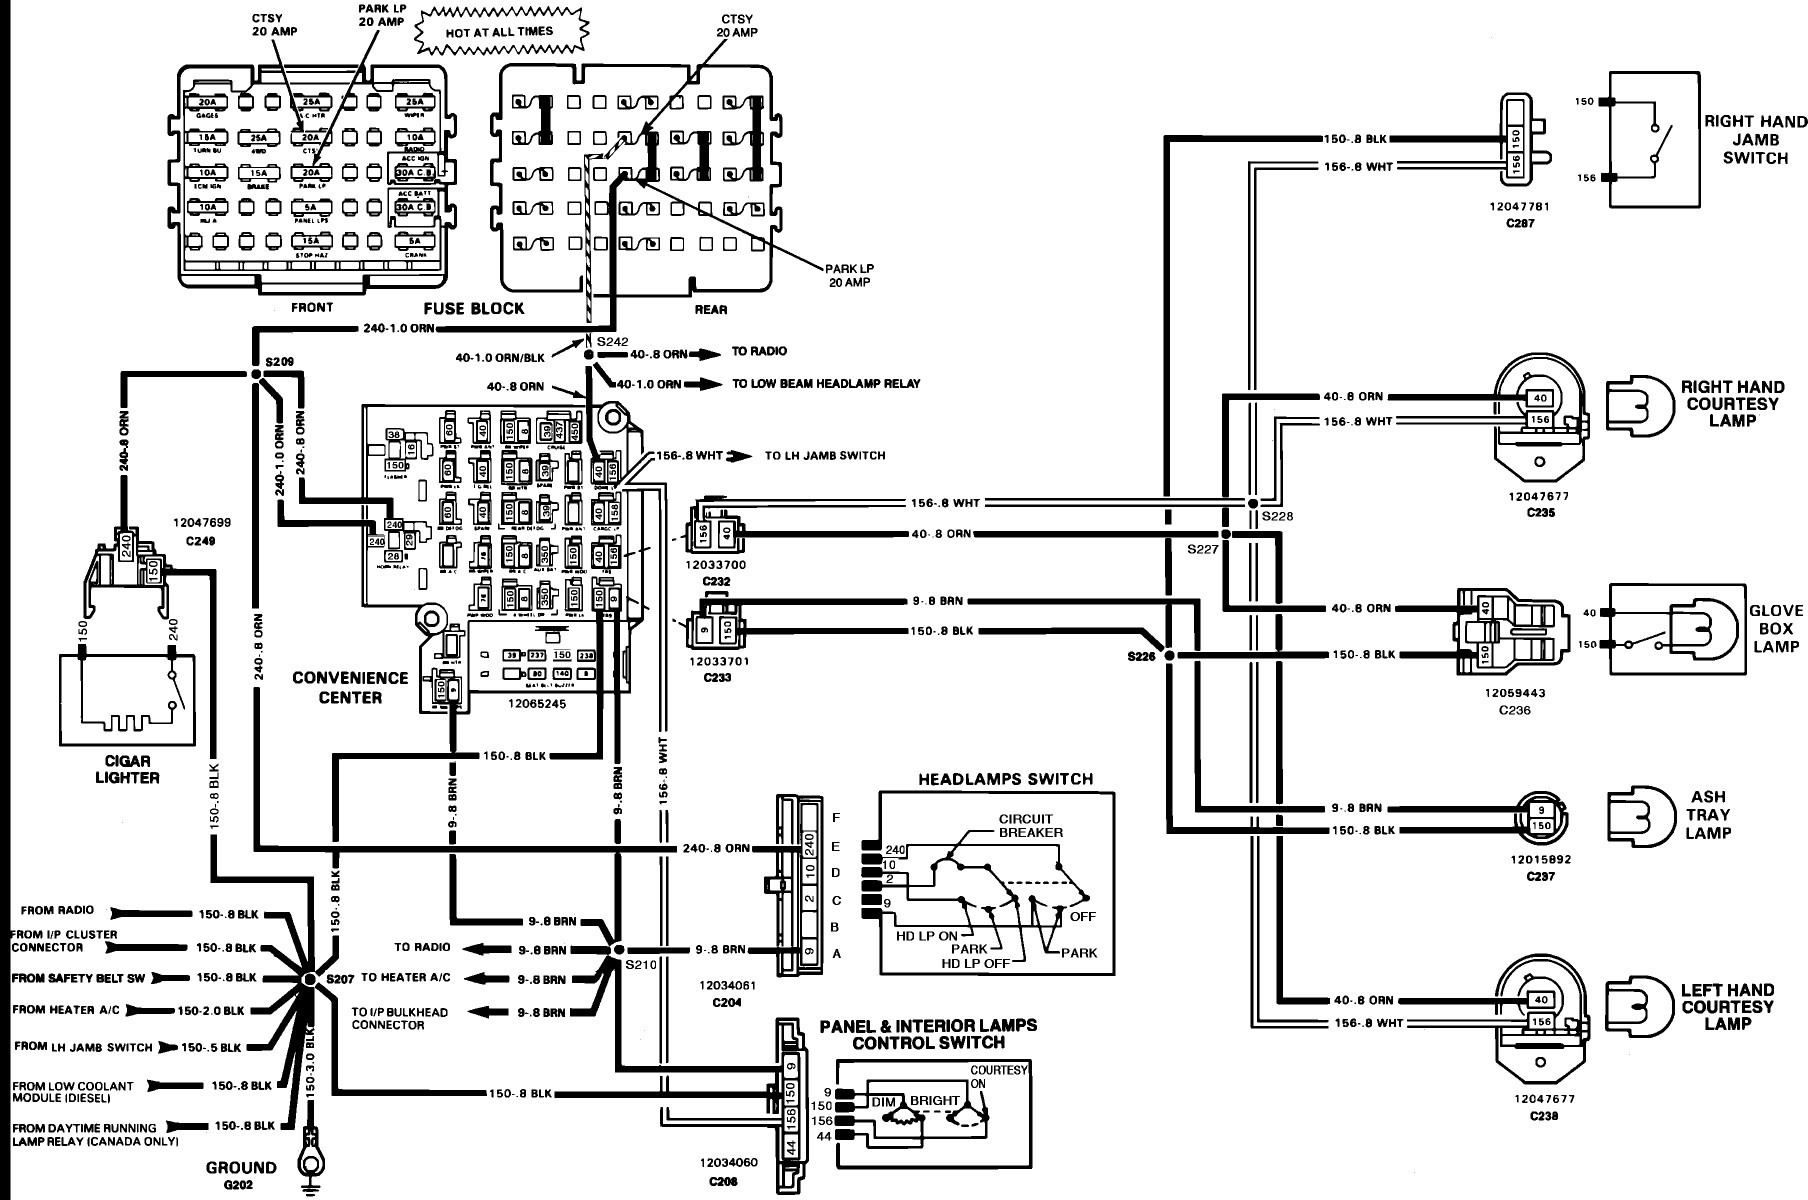 Chevy Suburban Parts Diagram Suburban Parts Diagram Besides Gm Bulkhead Connector Wiring Diagram